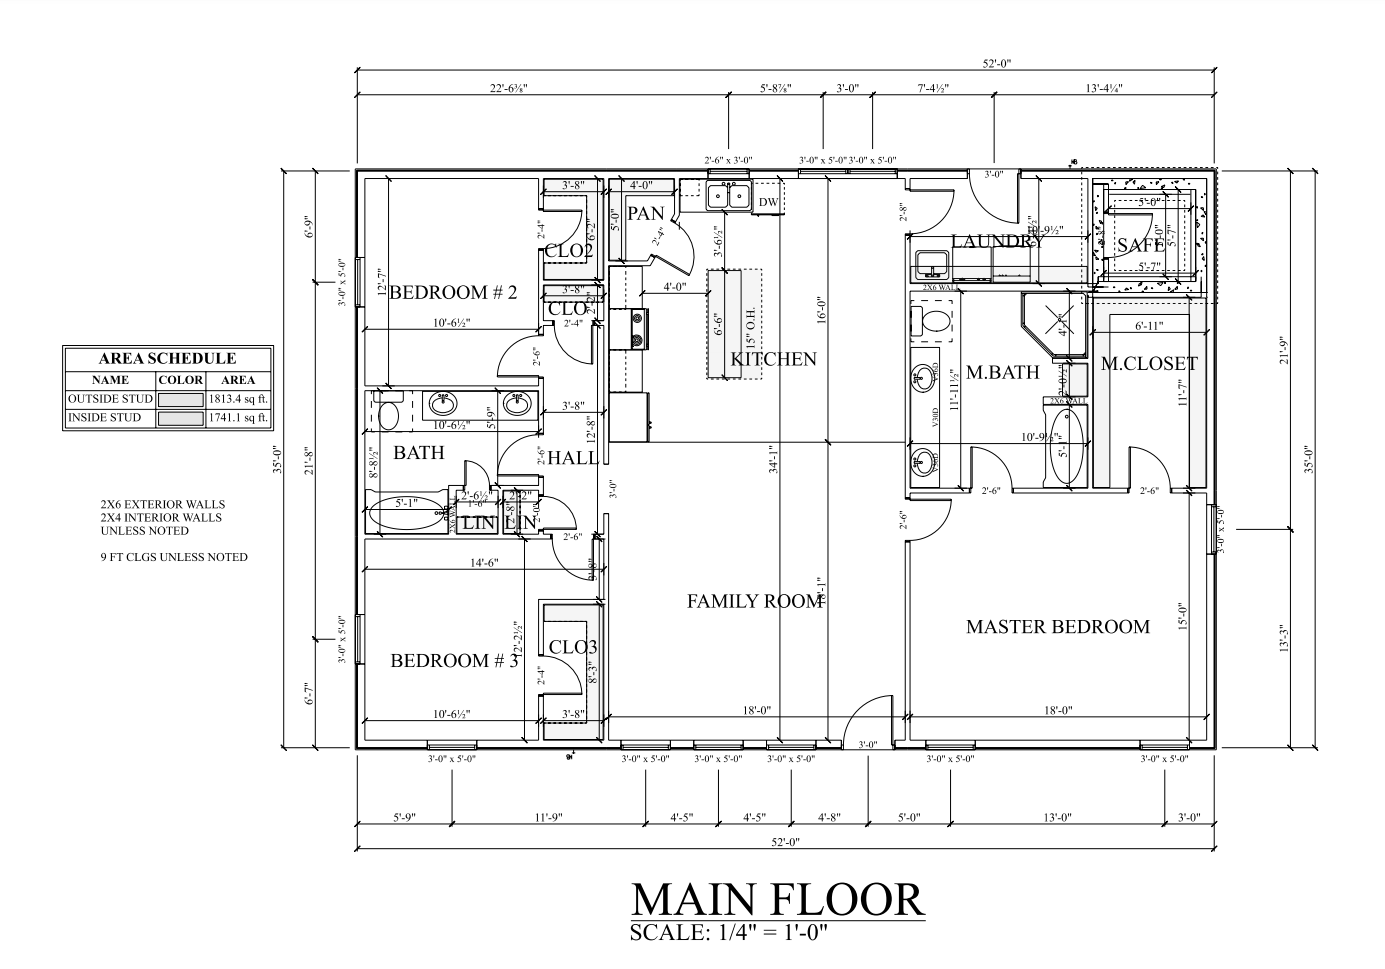 PL-62302 Greenway Barndominium House Plans